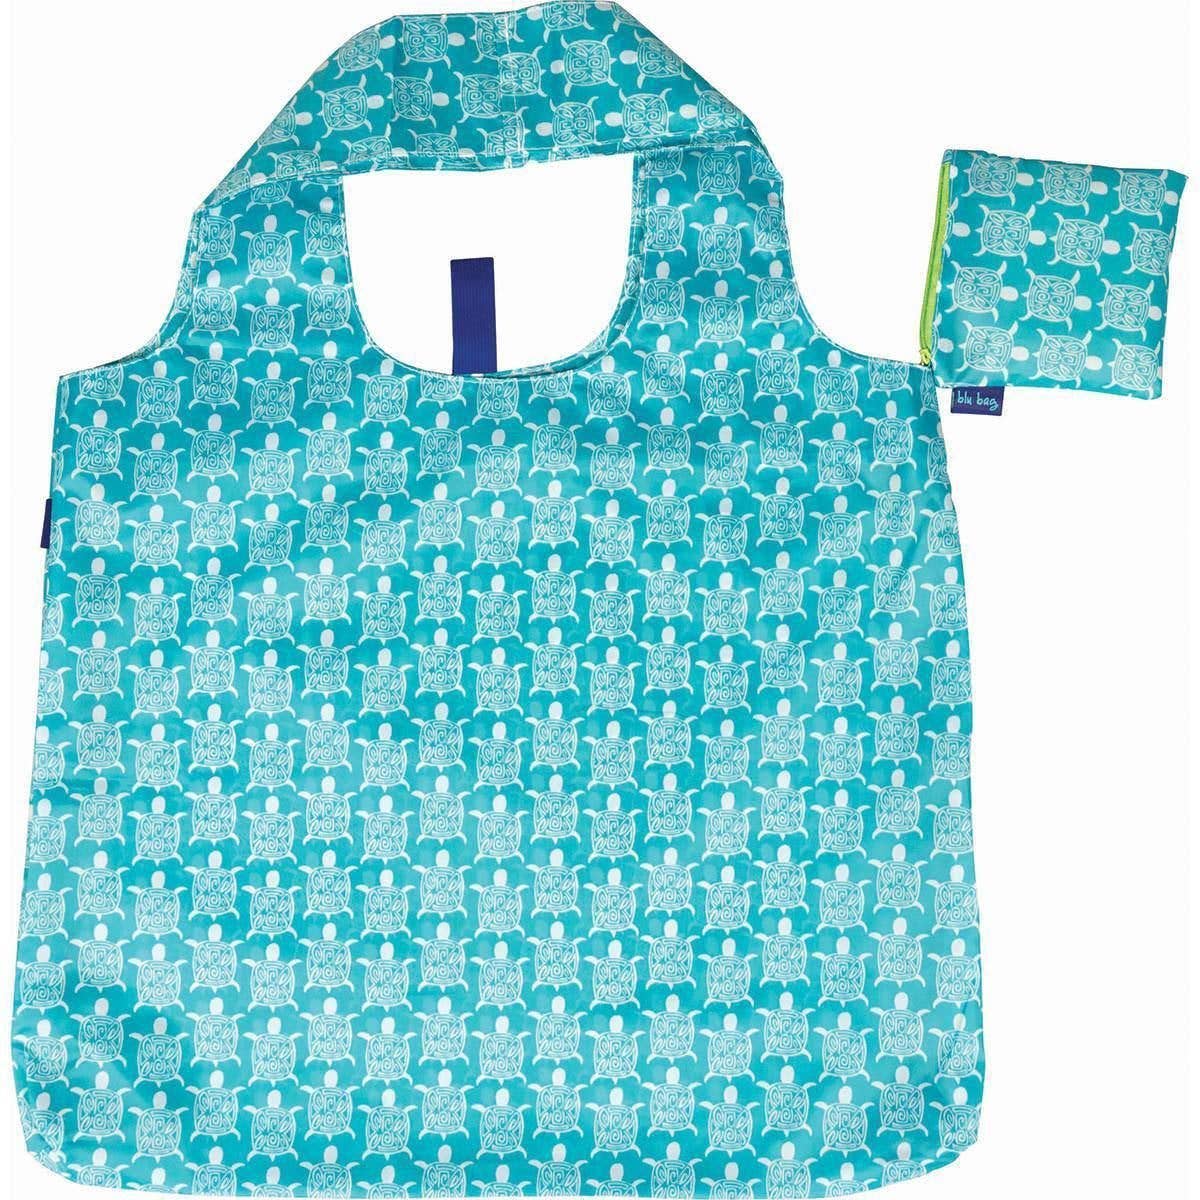 SEA TURTLE 'Blu Bag' Reusable Shopper